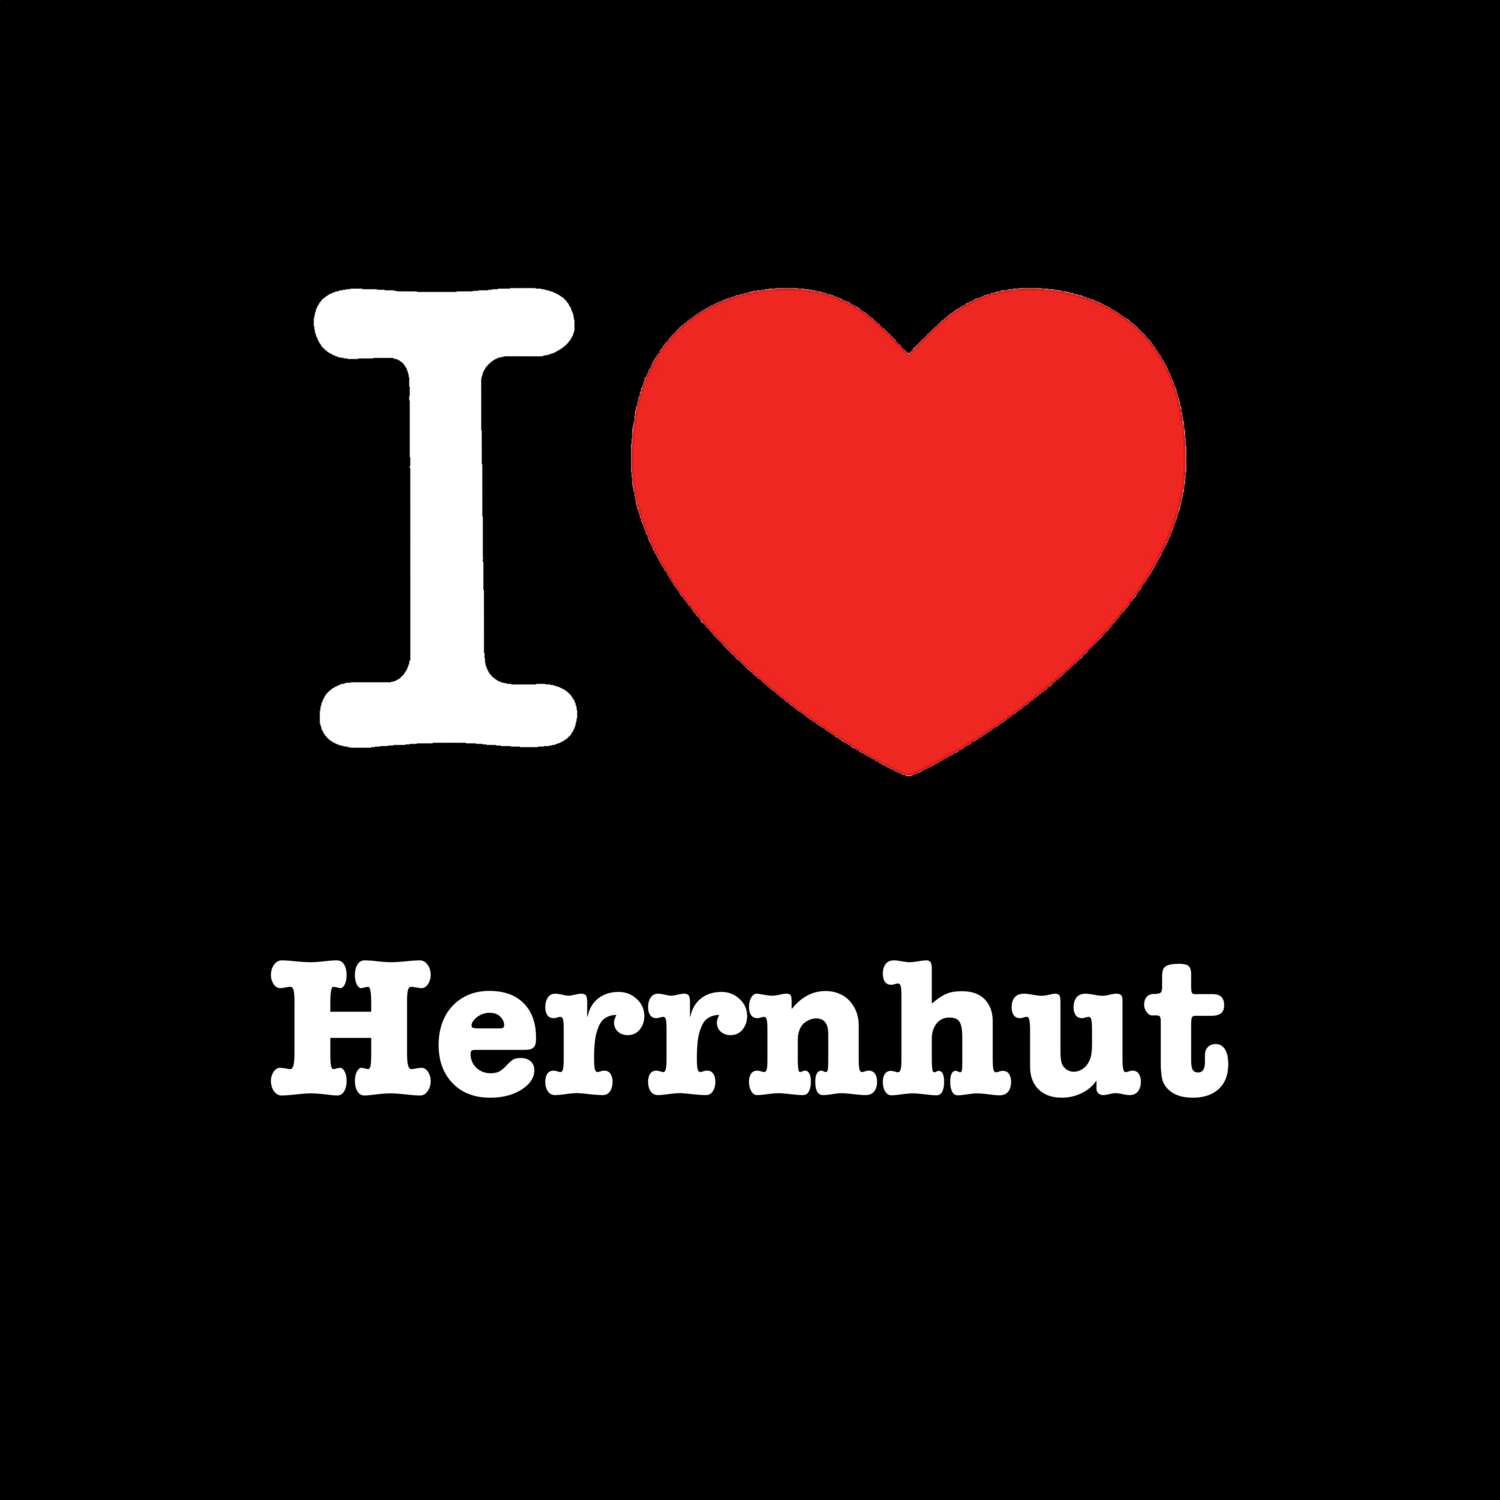 Herrnhut T-Shirt »I love«